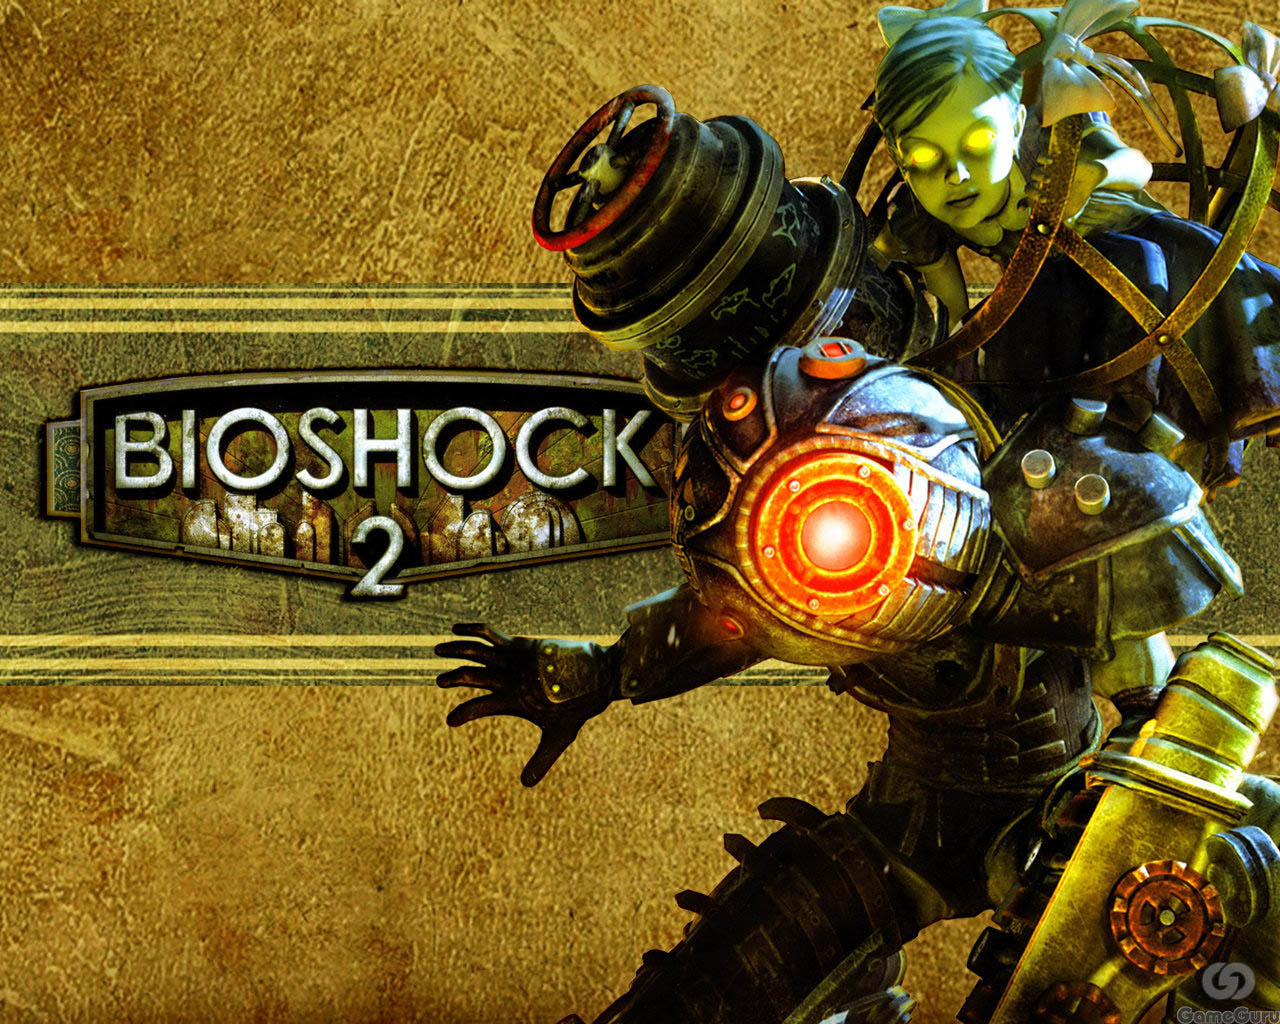 Bioshock Action Rpg Games Wallpaper Image Featuring